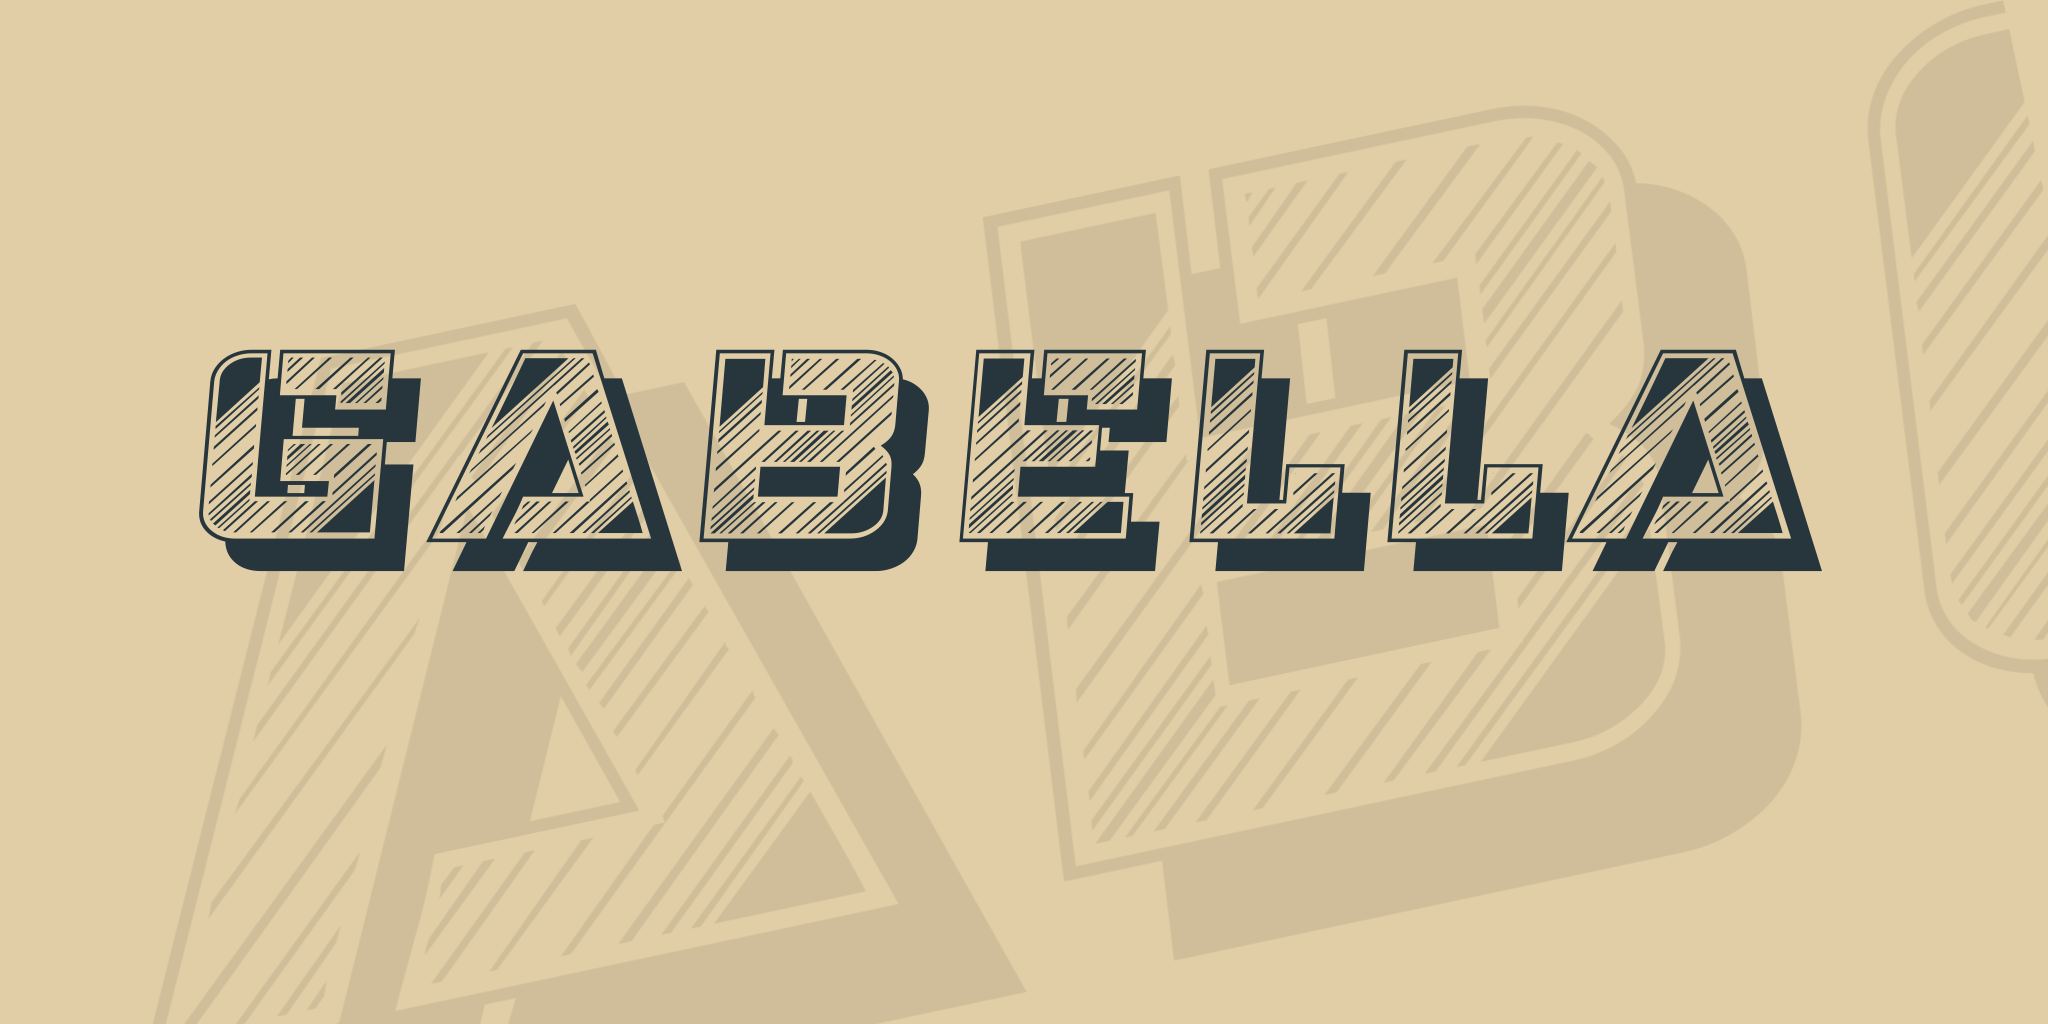 Gabella